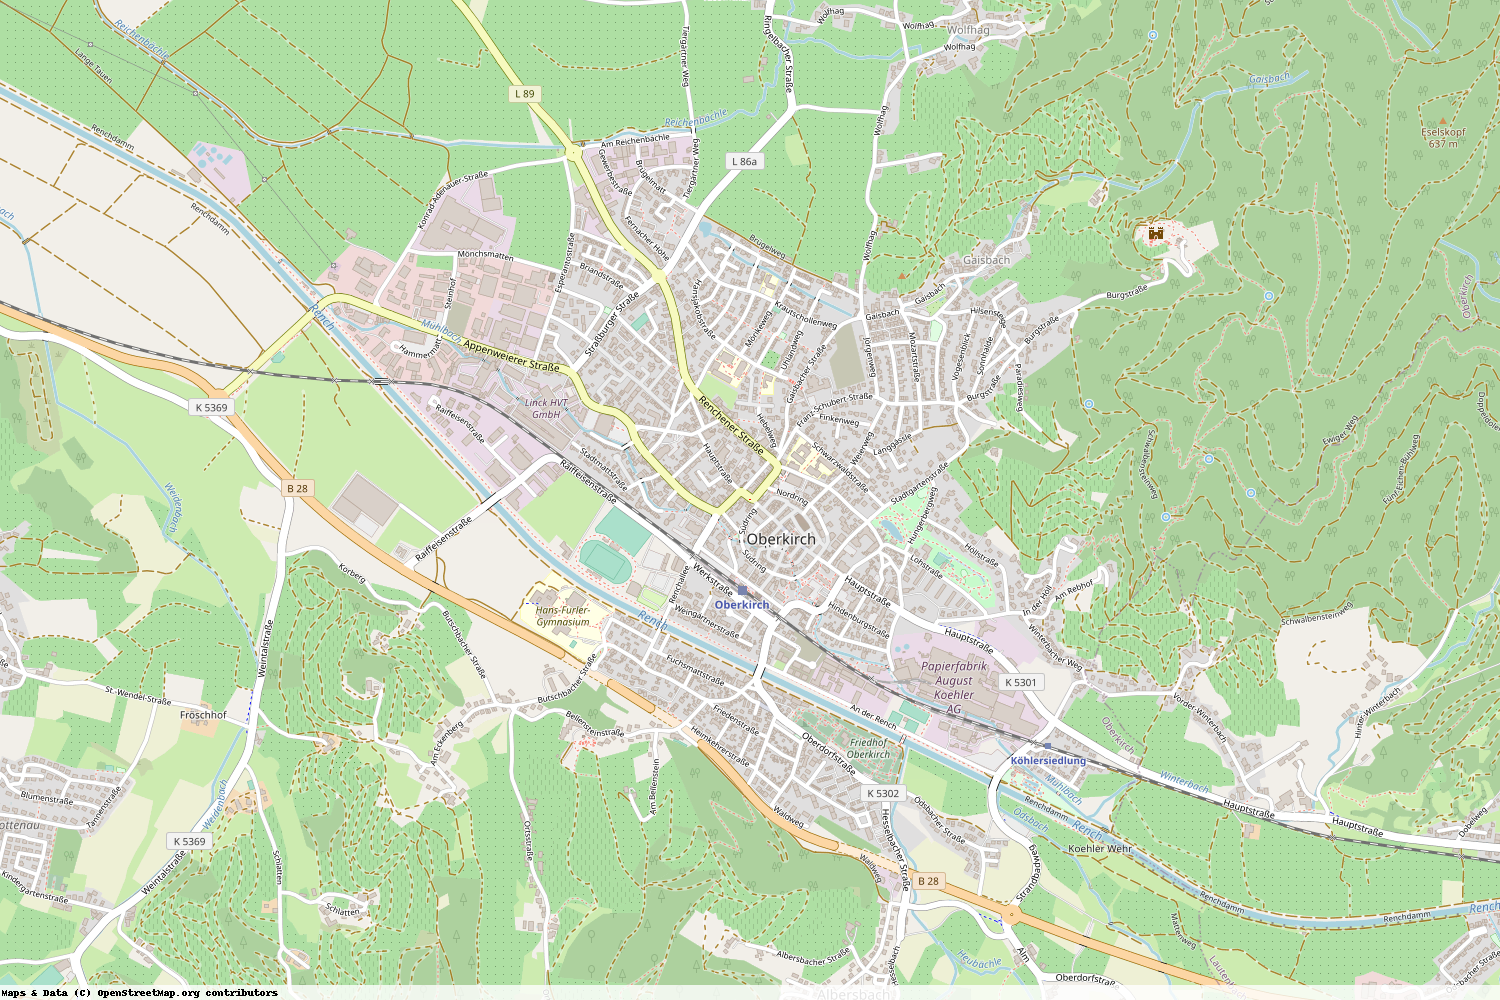 Ist gerade Stromausfall in Baden-Württemberg - Ortenaukreis - Oberkirch?